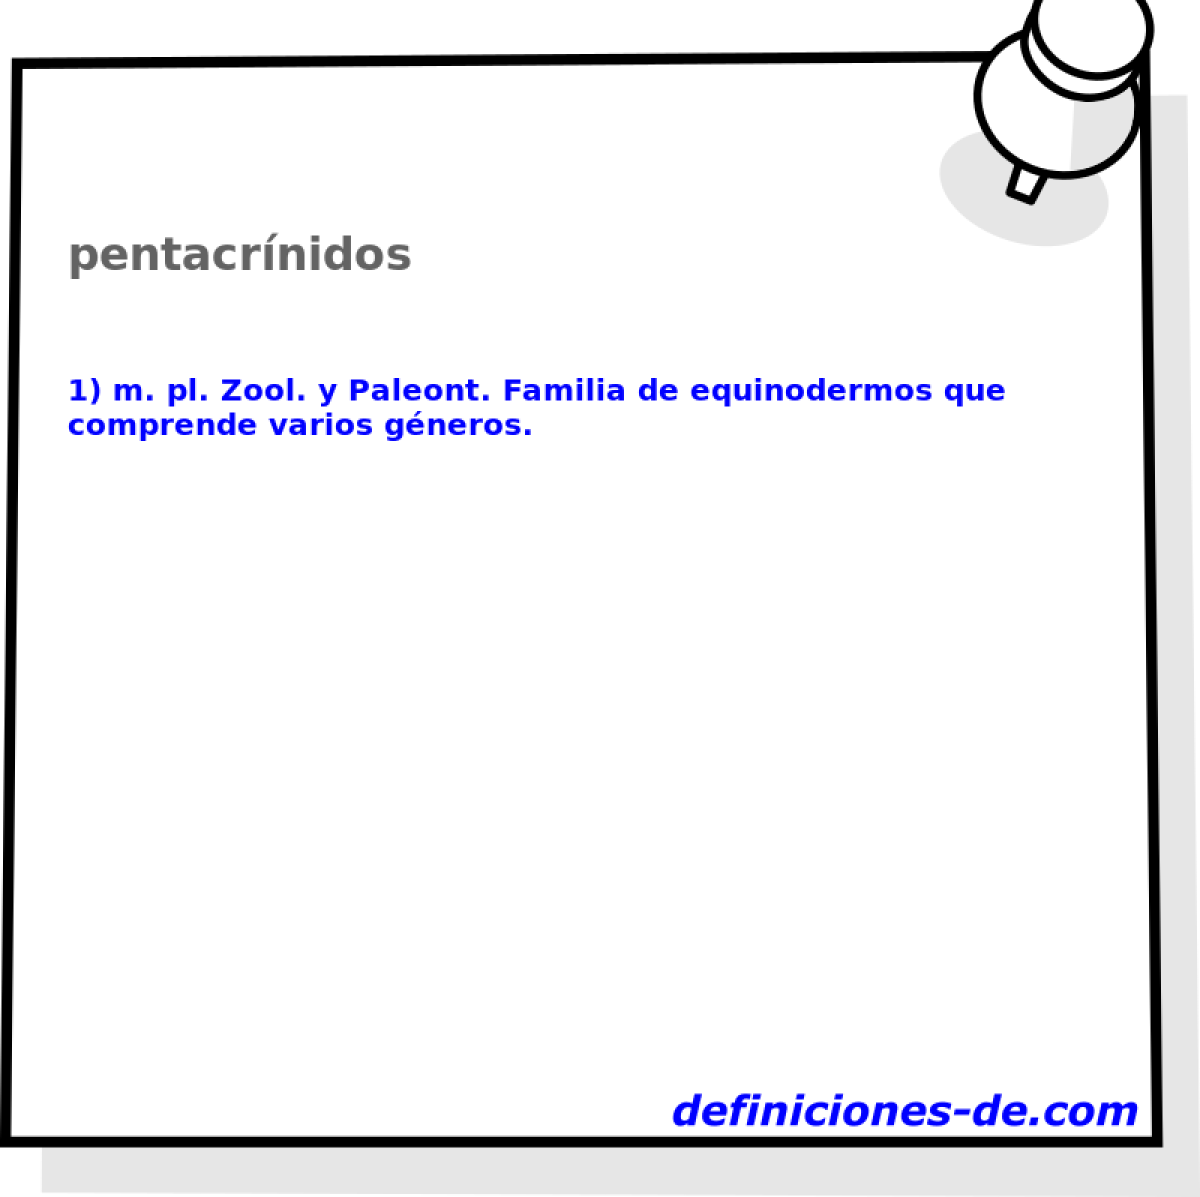 pentacrnidos 